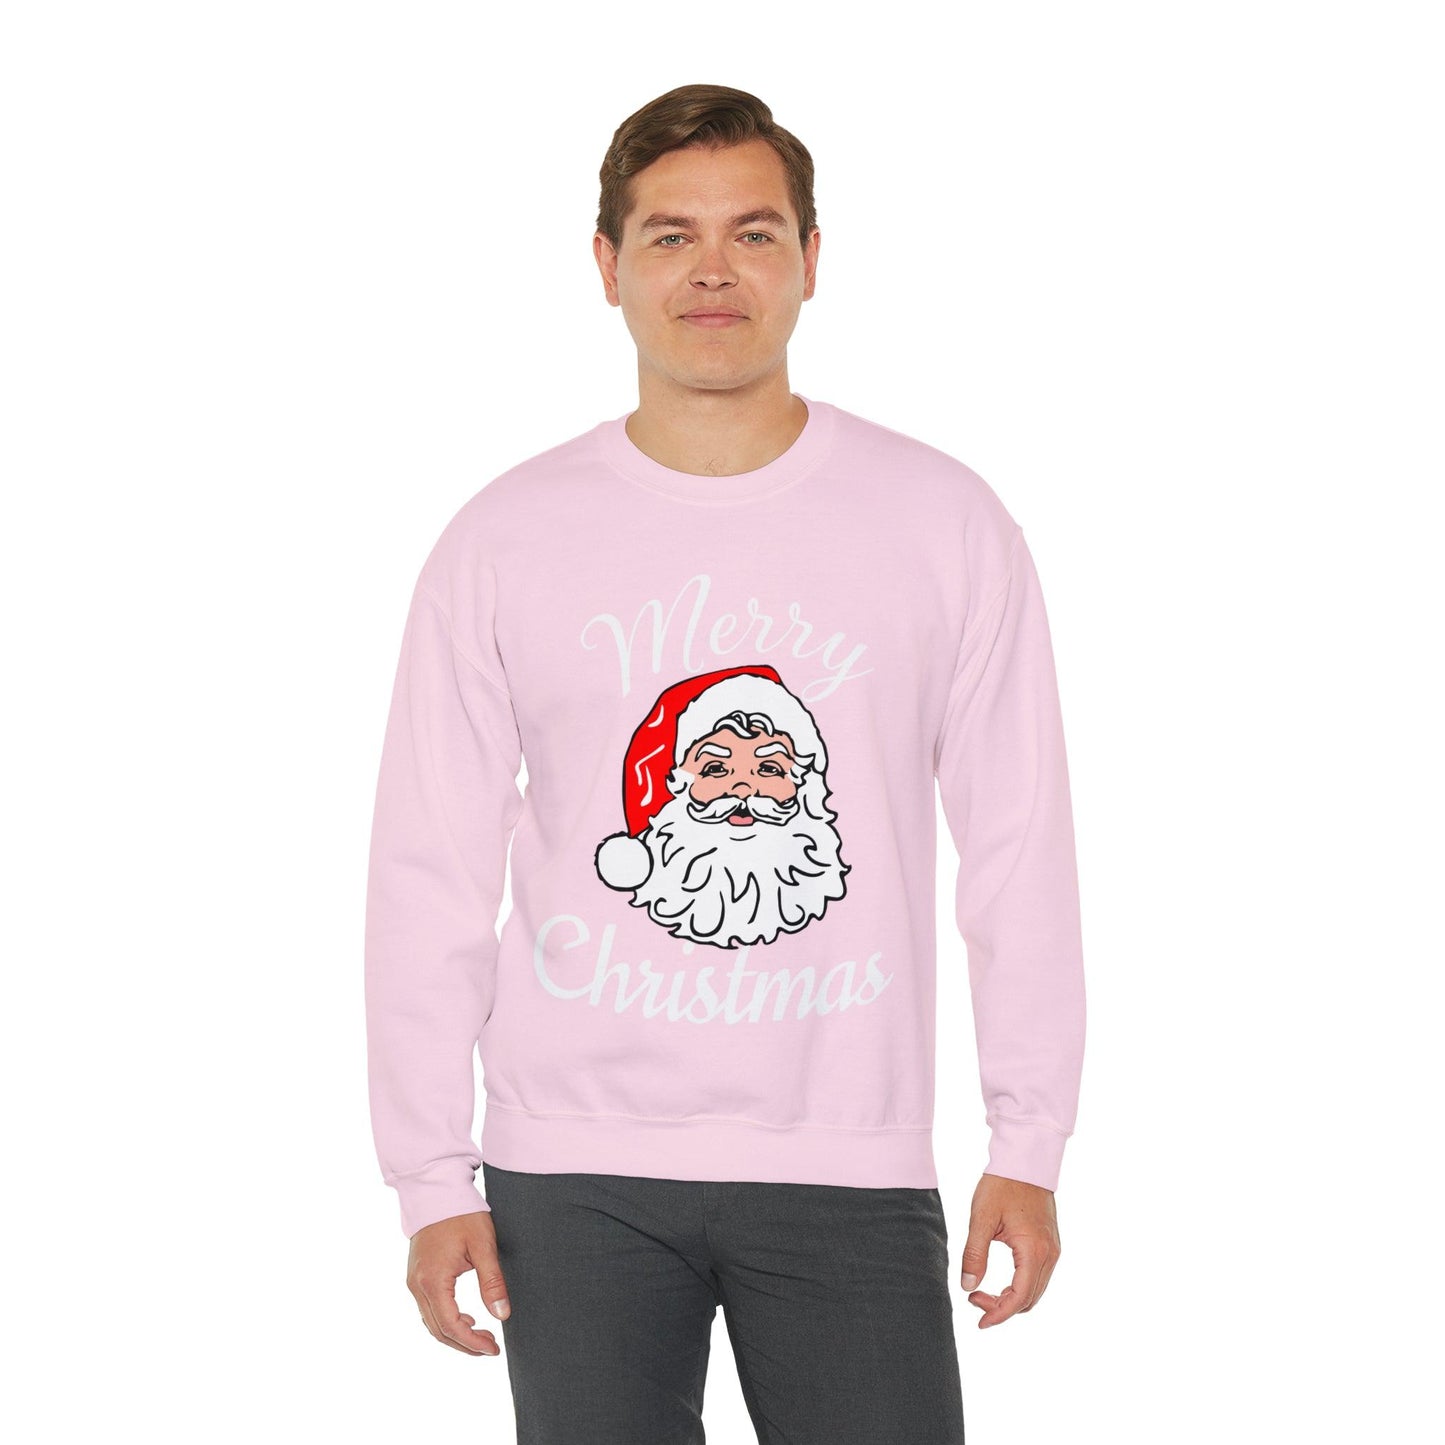 Santa, Merry Christmas Sweatshirt Santa Sweatshirt Christmas Shirt Christmas Gift for Him or Her